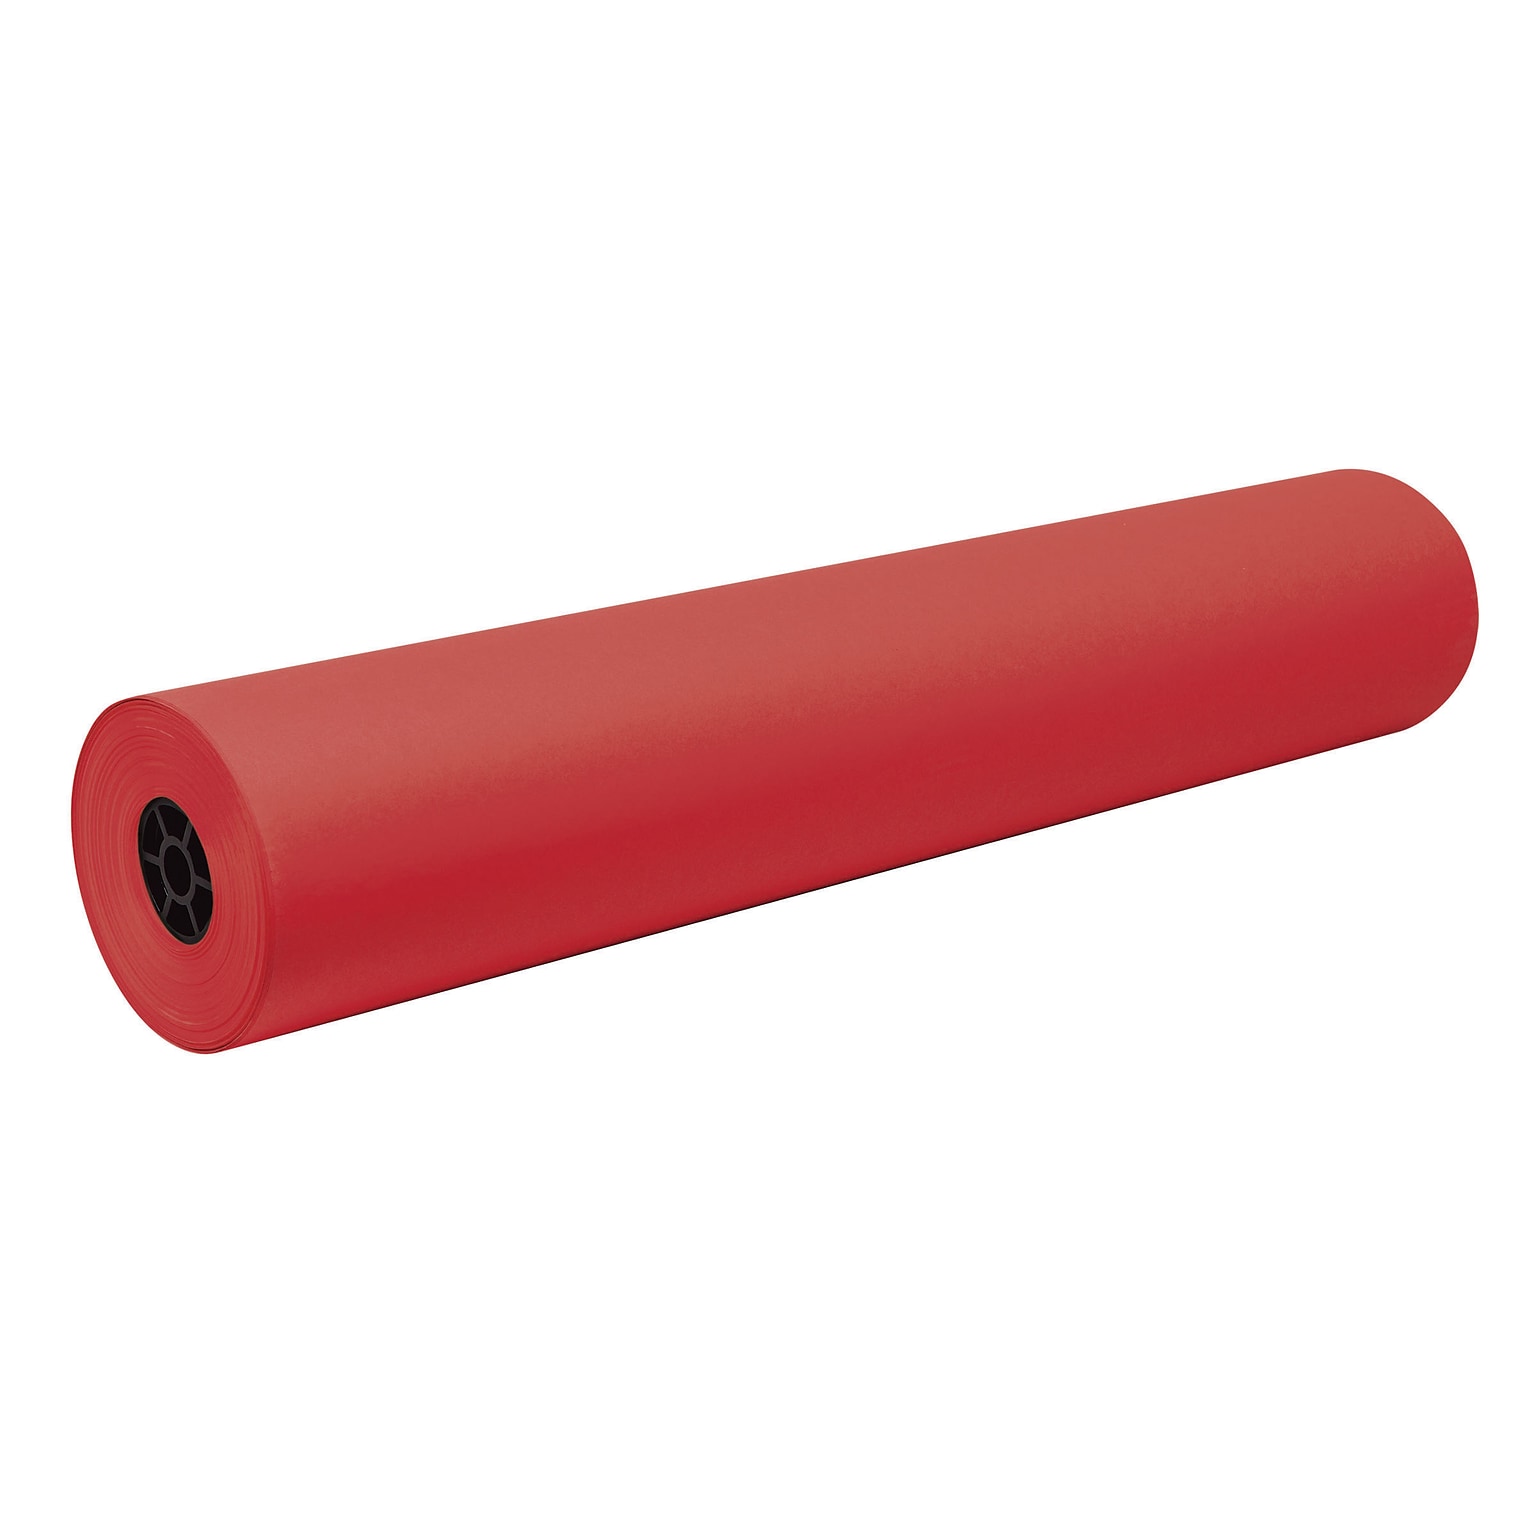 Decorol Flame Retardant Paper Roll, 36 x 1,000, Festive Red (P101203)